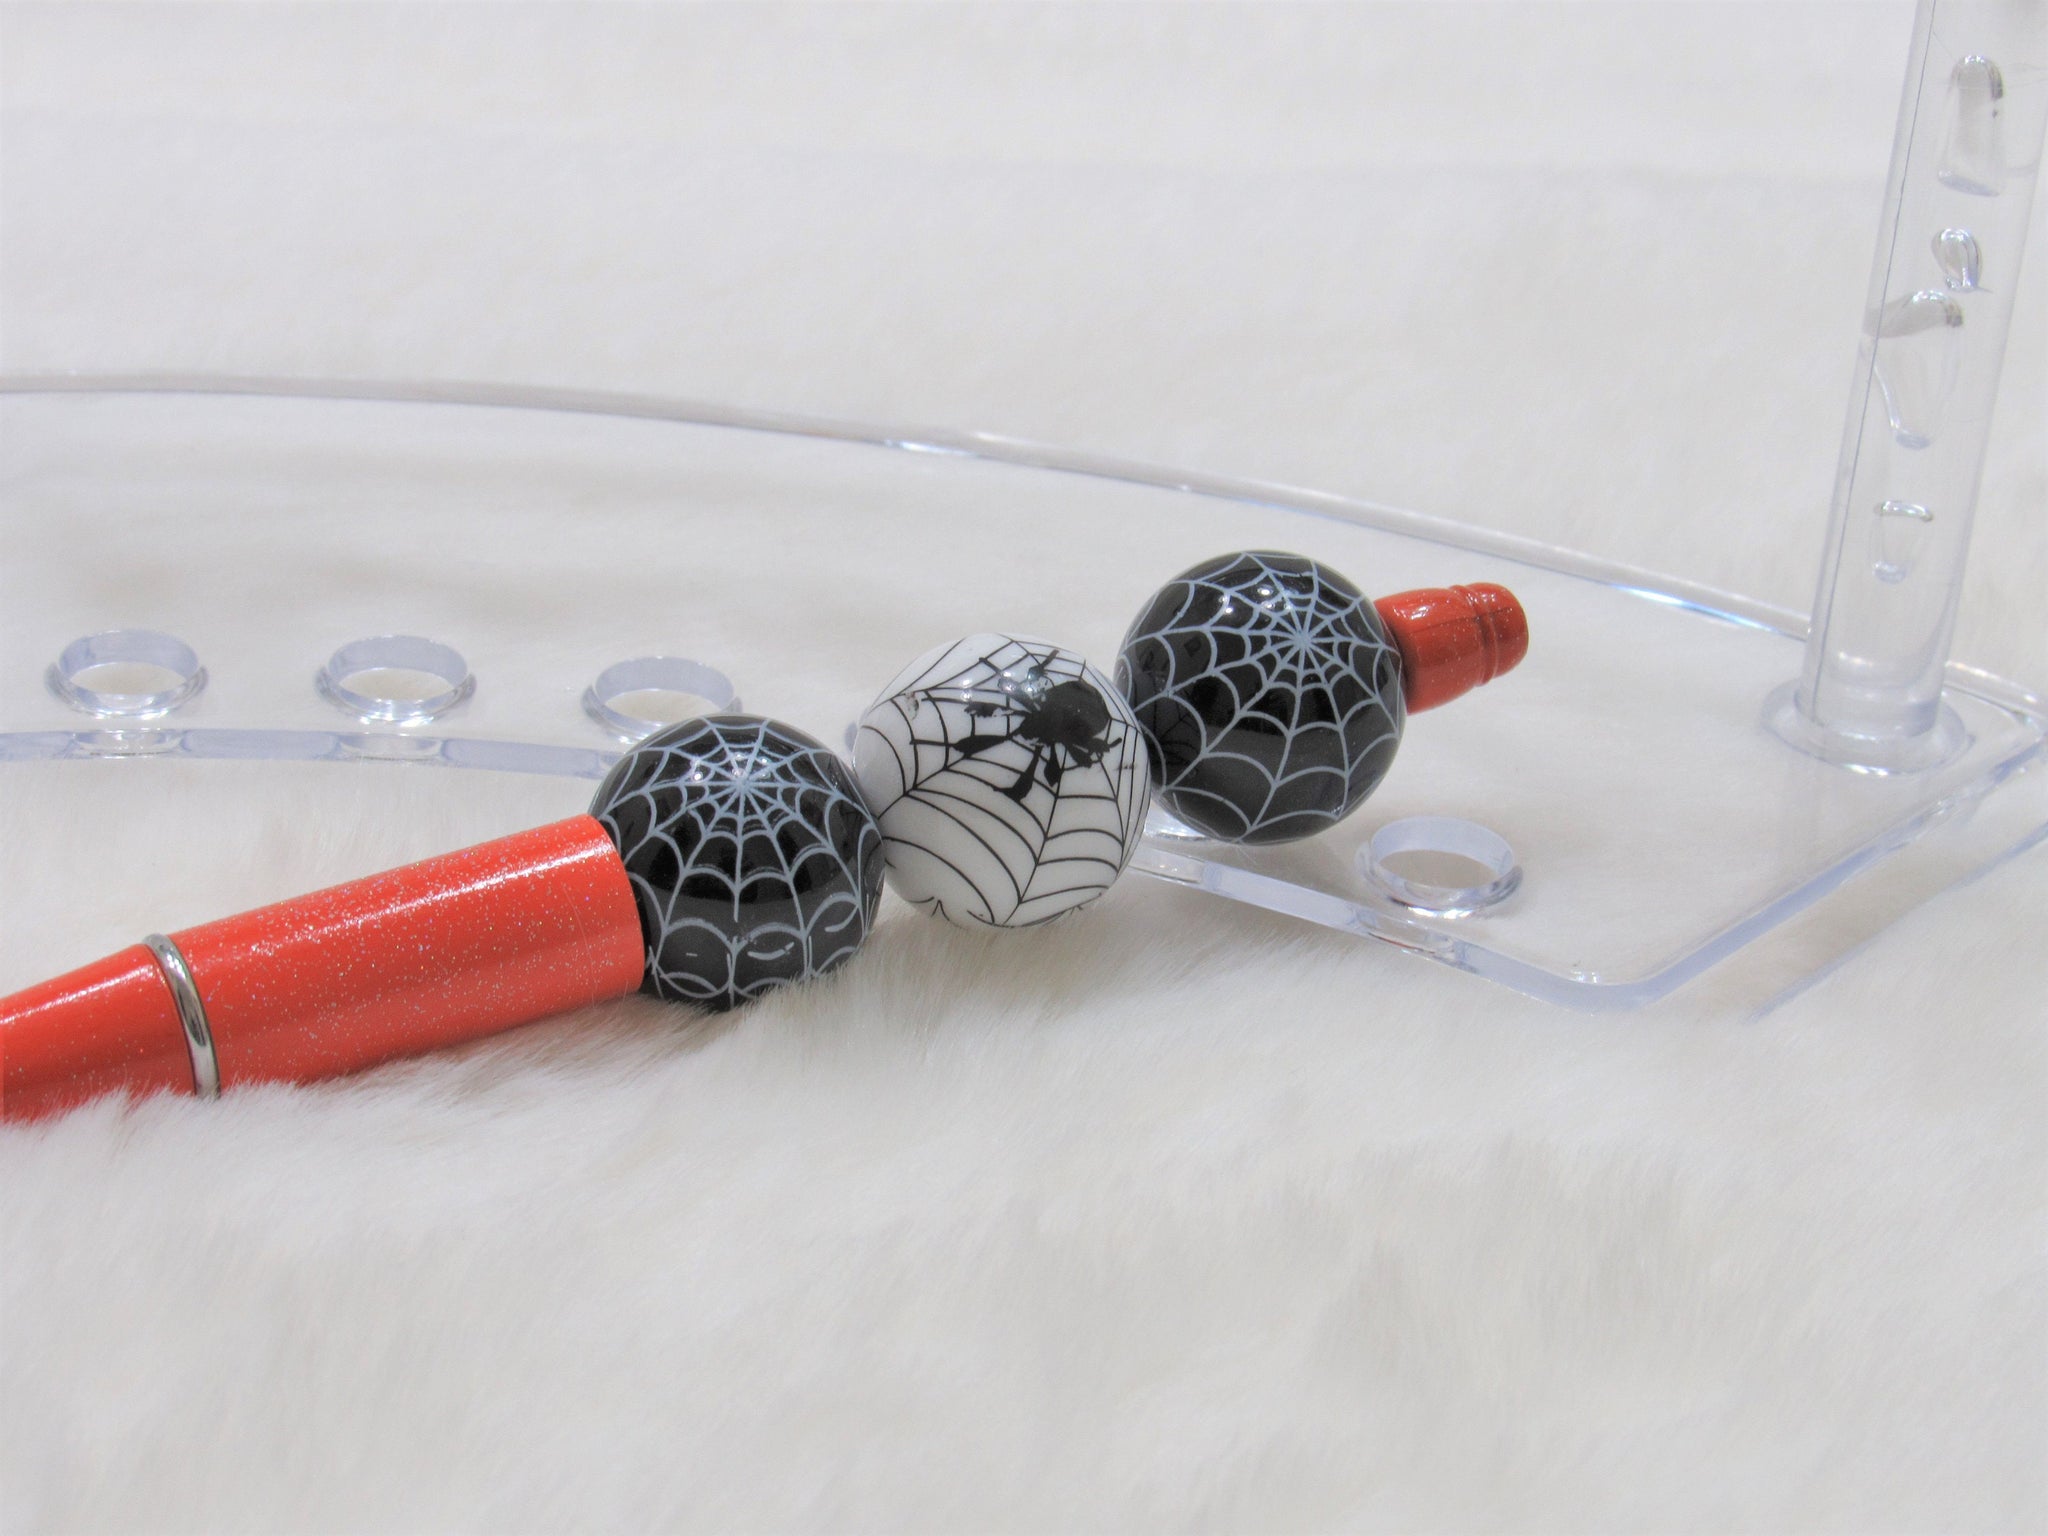 Bubblegum Beadable Pens, Beadable Pen Blanks, DIY Bubblegum